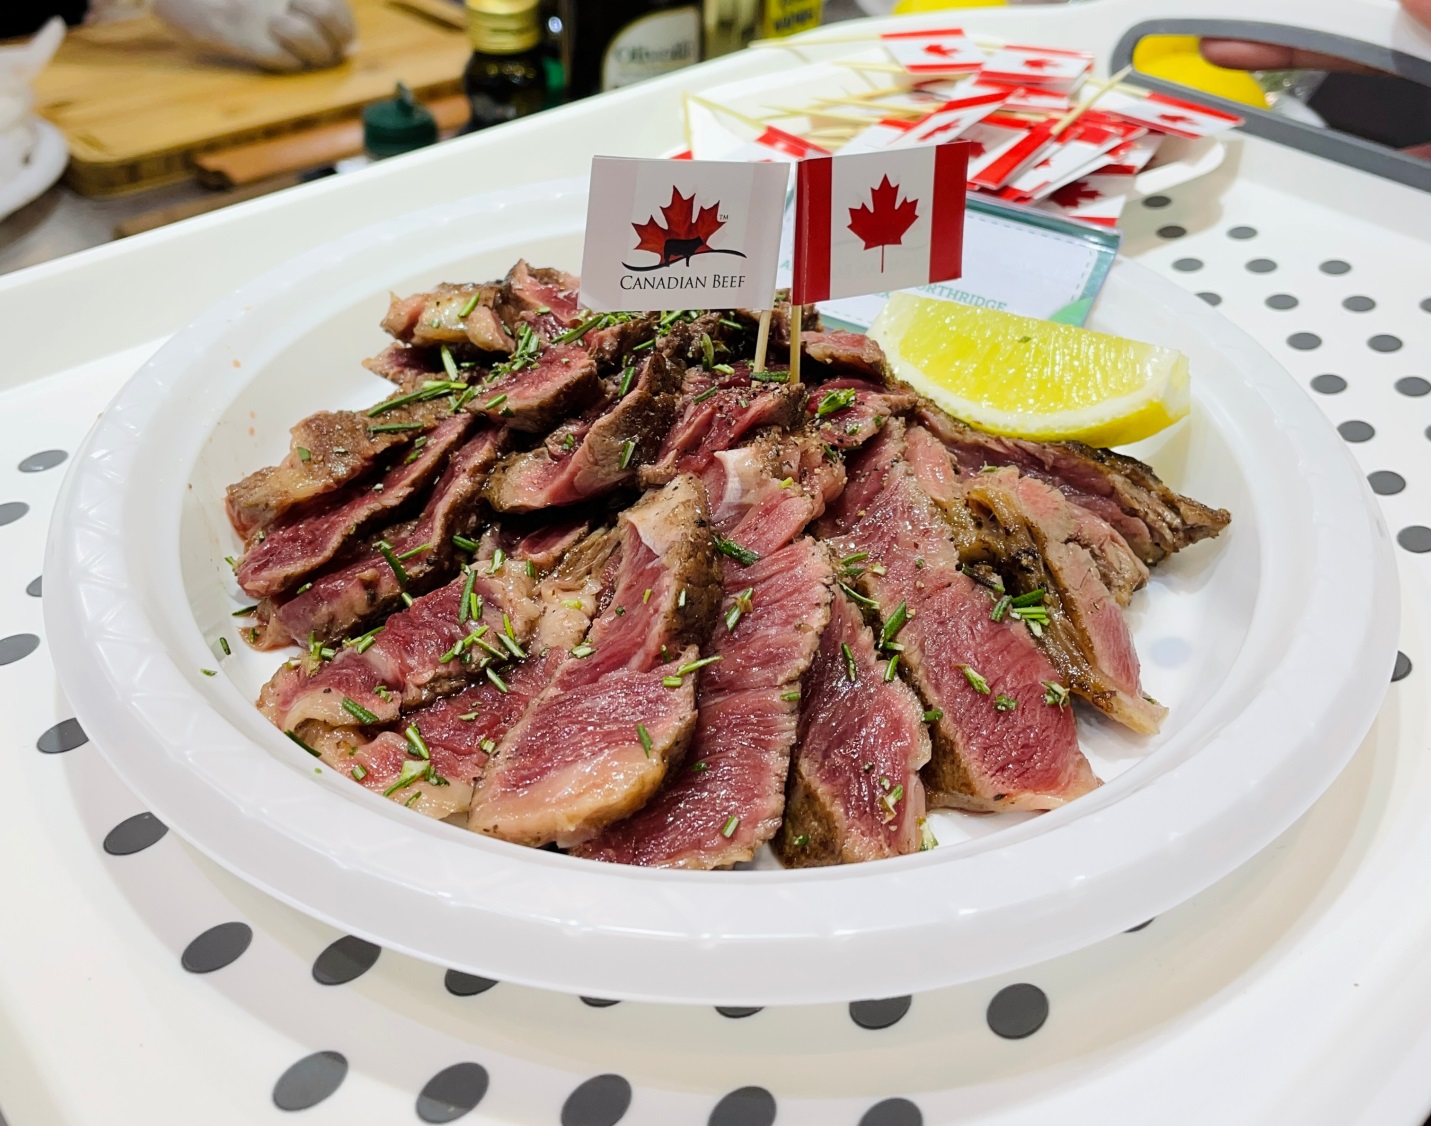 Trải nghiệm ẩm thực Canada tại Food Hotel Vietnam 2022 - 1